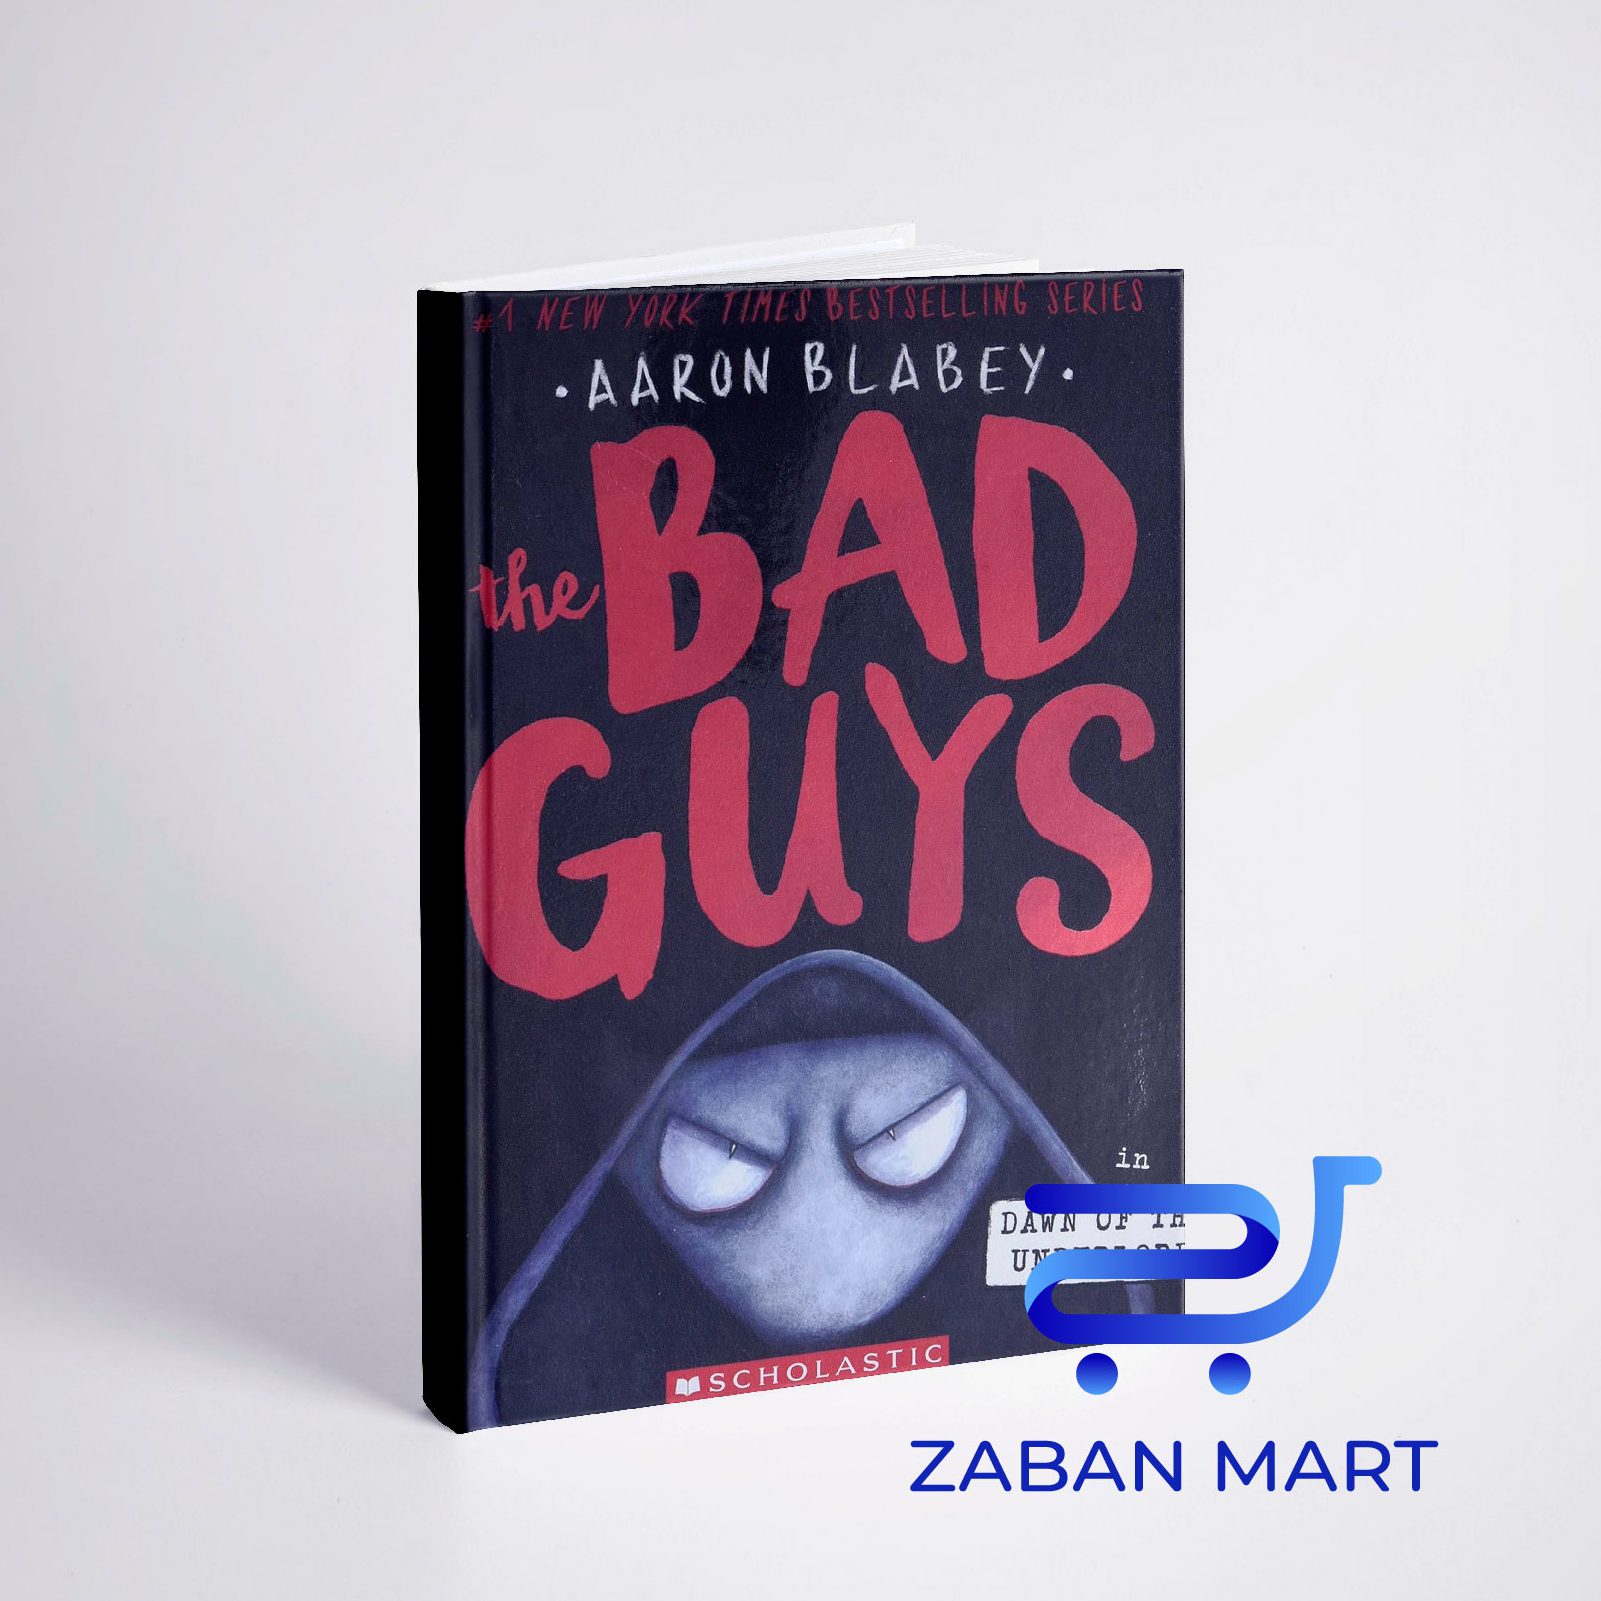 خرید کتاب The Bad Guys in the Dawn of the Underlord (The Bad Guys 11) از فروشگاه اینترنتی زبان مارت